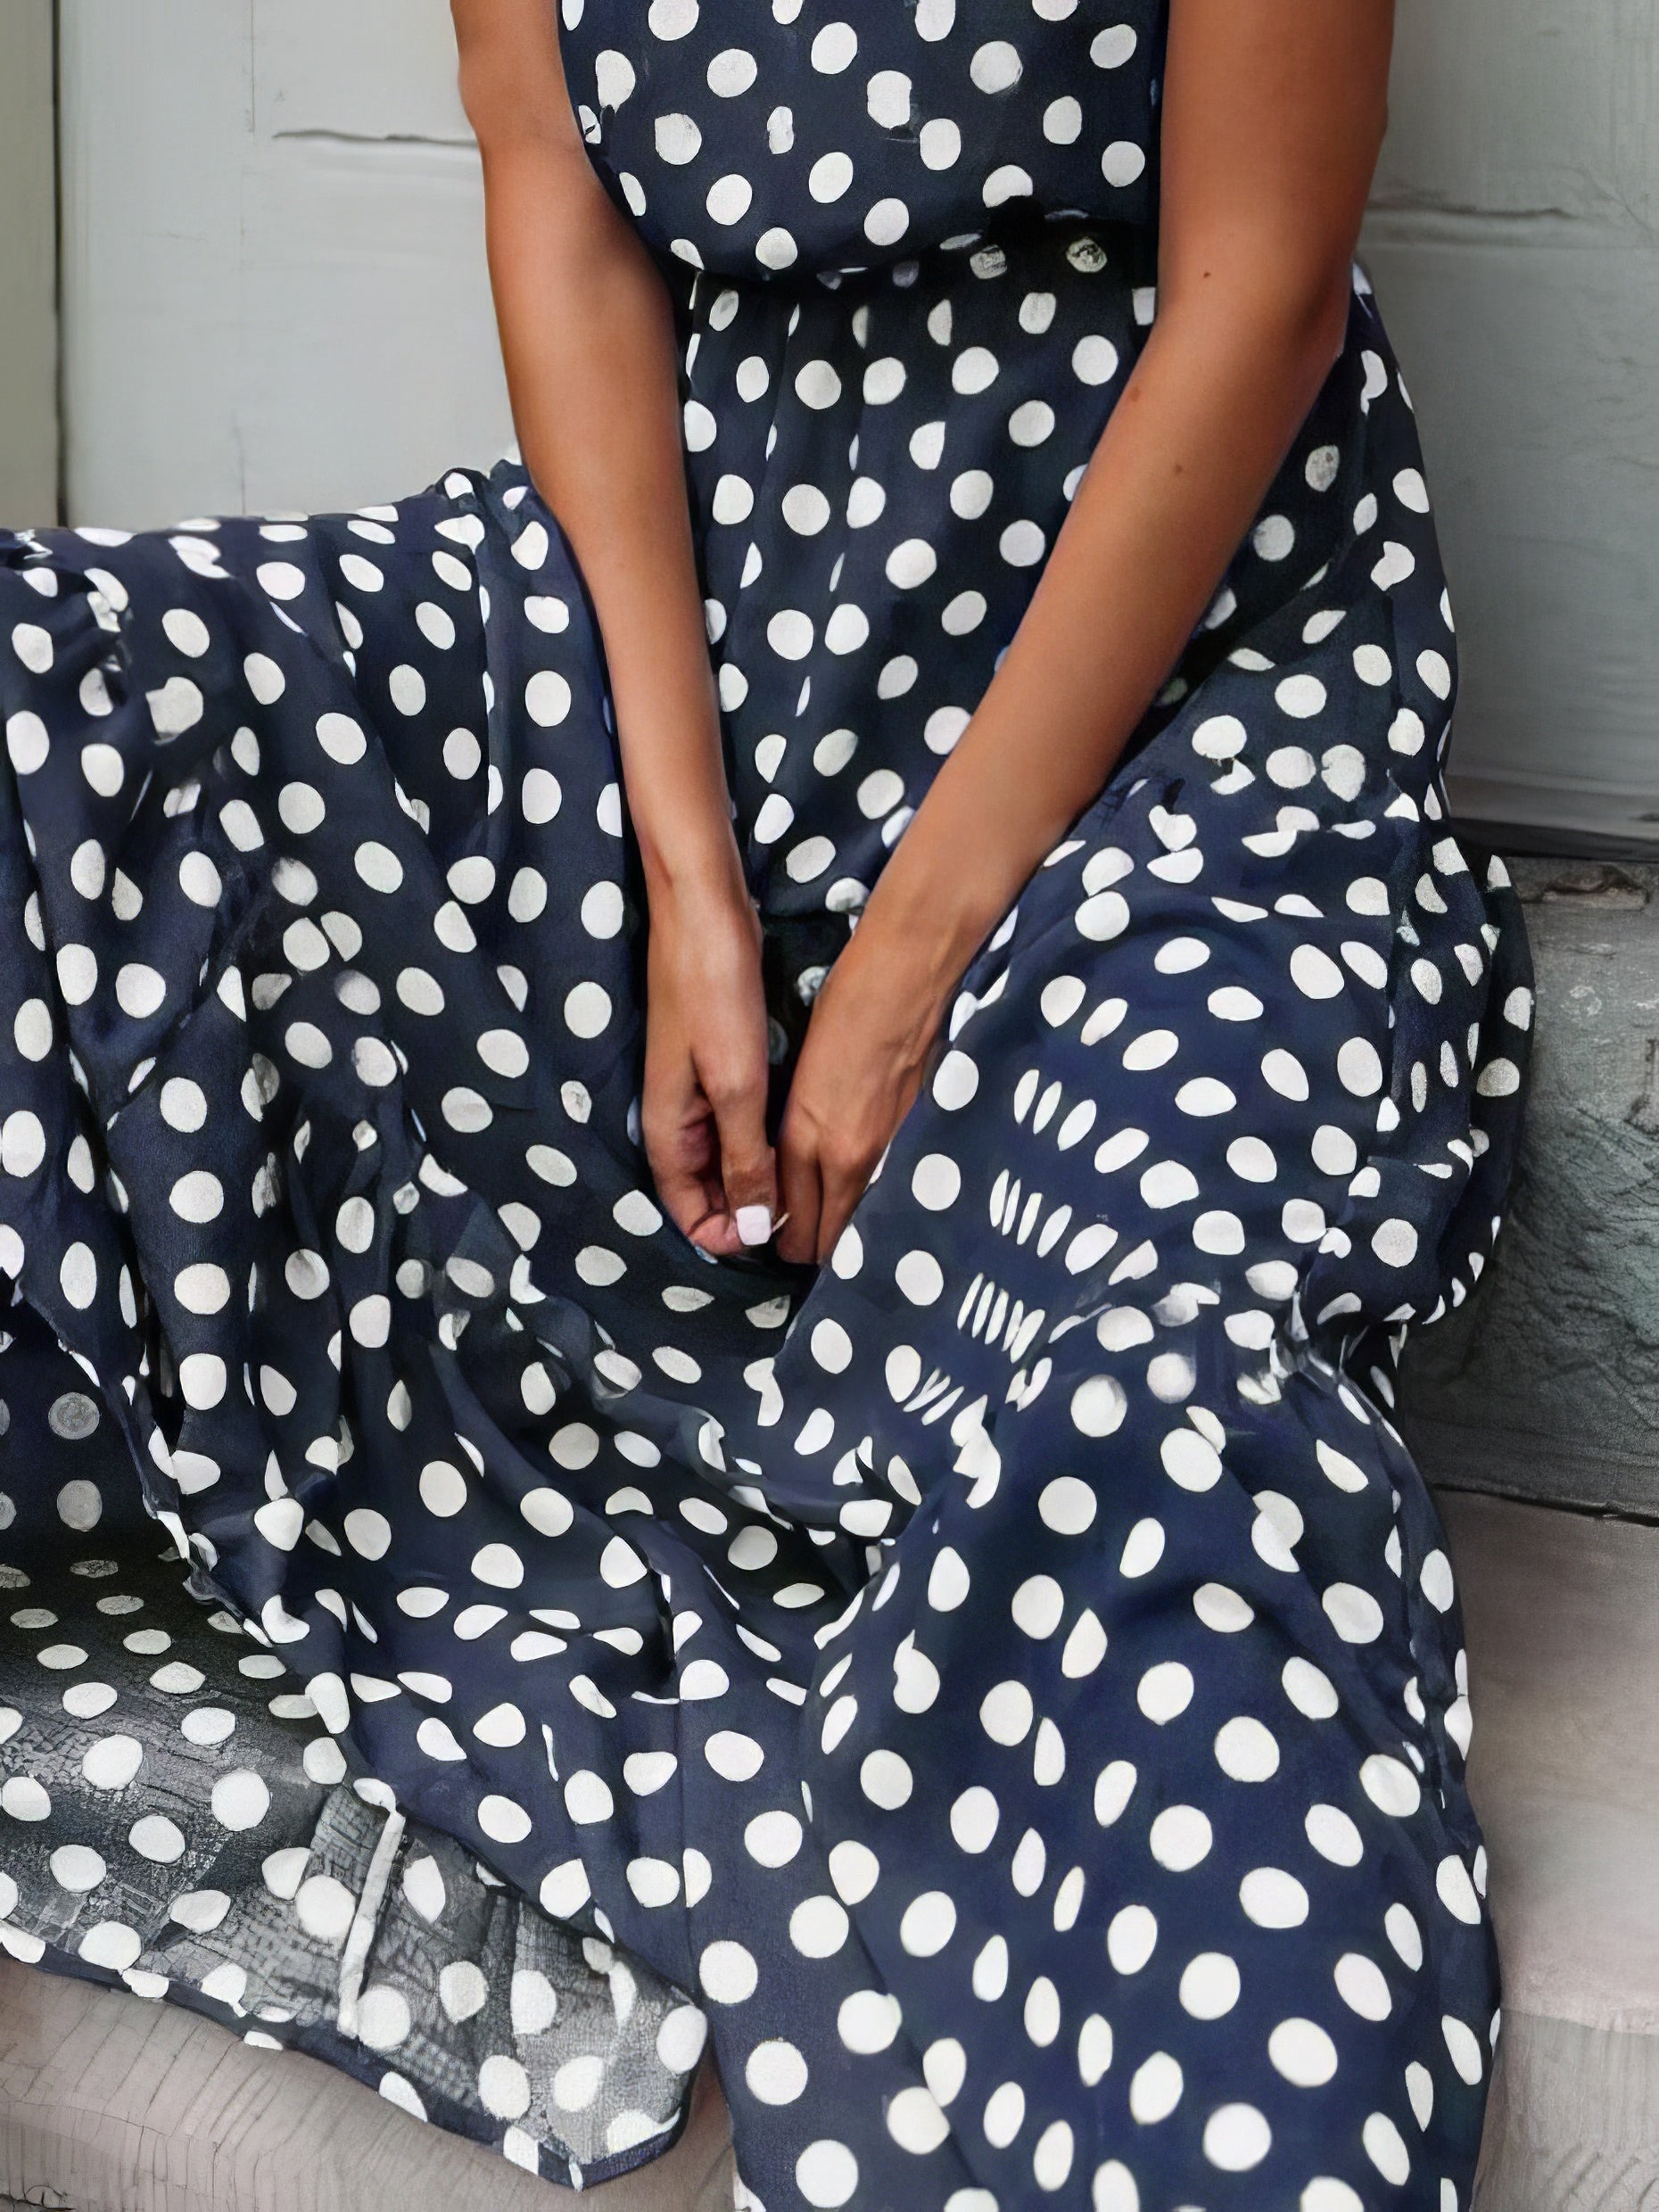 Maxi Dresses - Polka Dot Print Round Neck Casual Dress - MsDressly